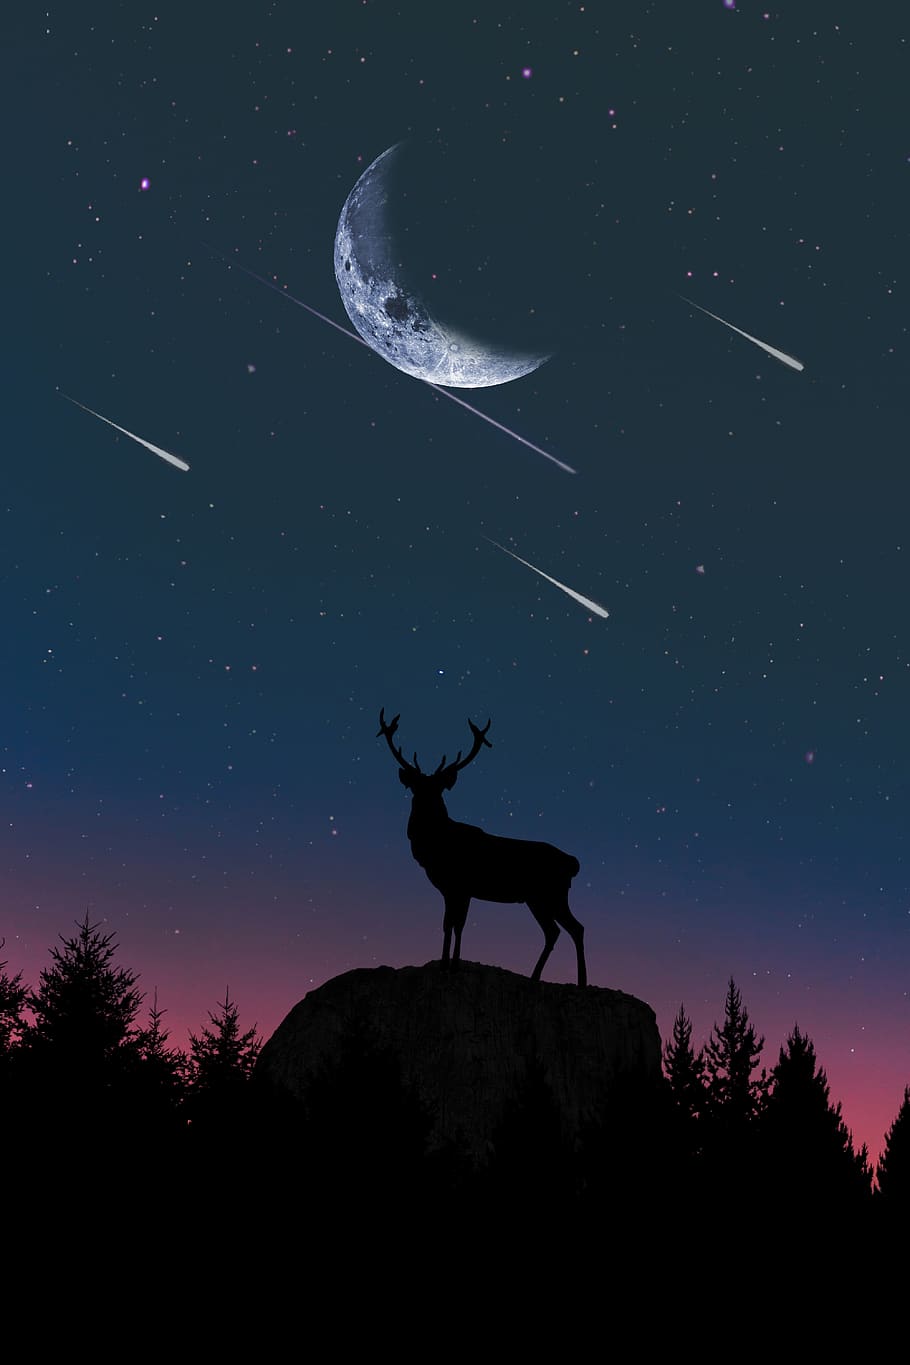 moon, sky, nature, dusk, sun, silhouette, dawn, deer, shooting star, dark forest